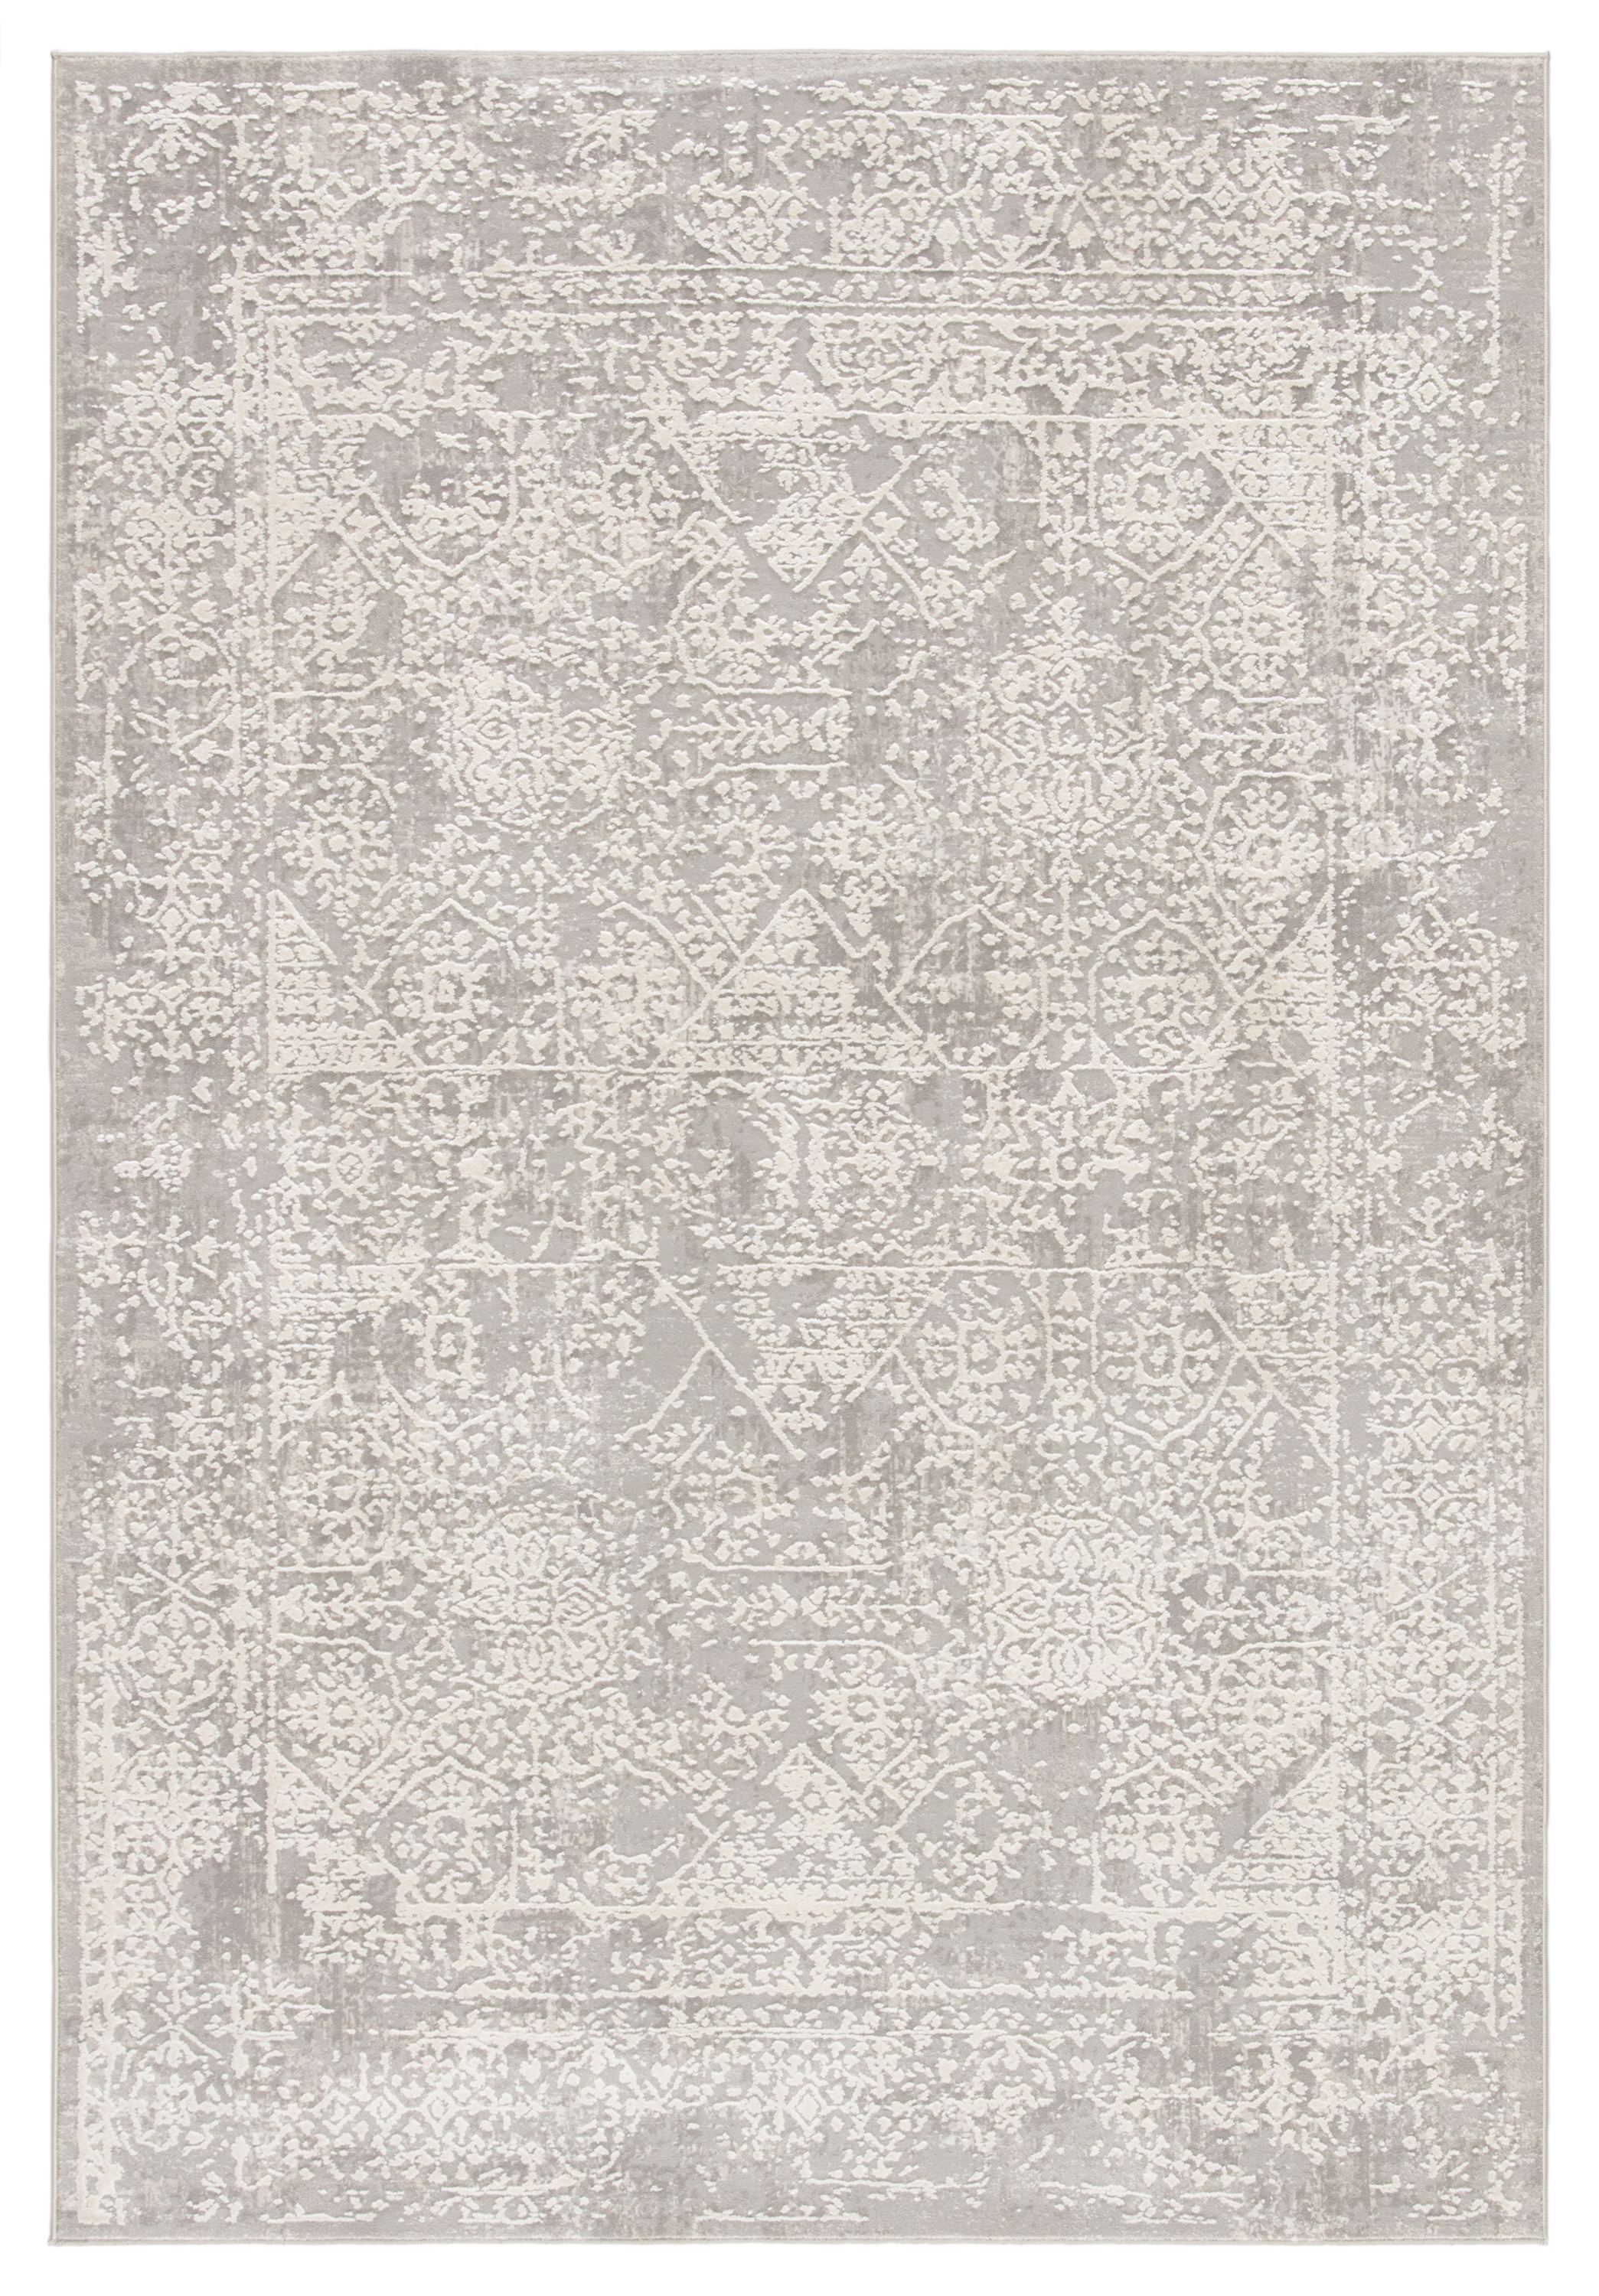 Lianna Abstract Gray/ White Area Rug (5' X 7'6") - Image 0